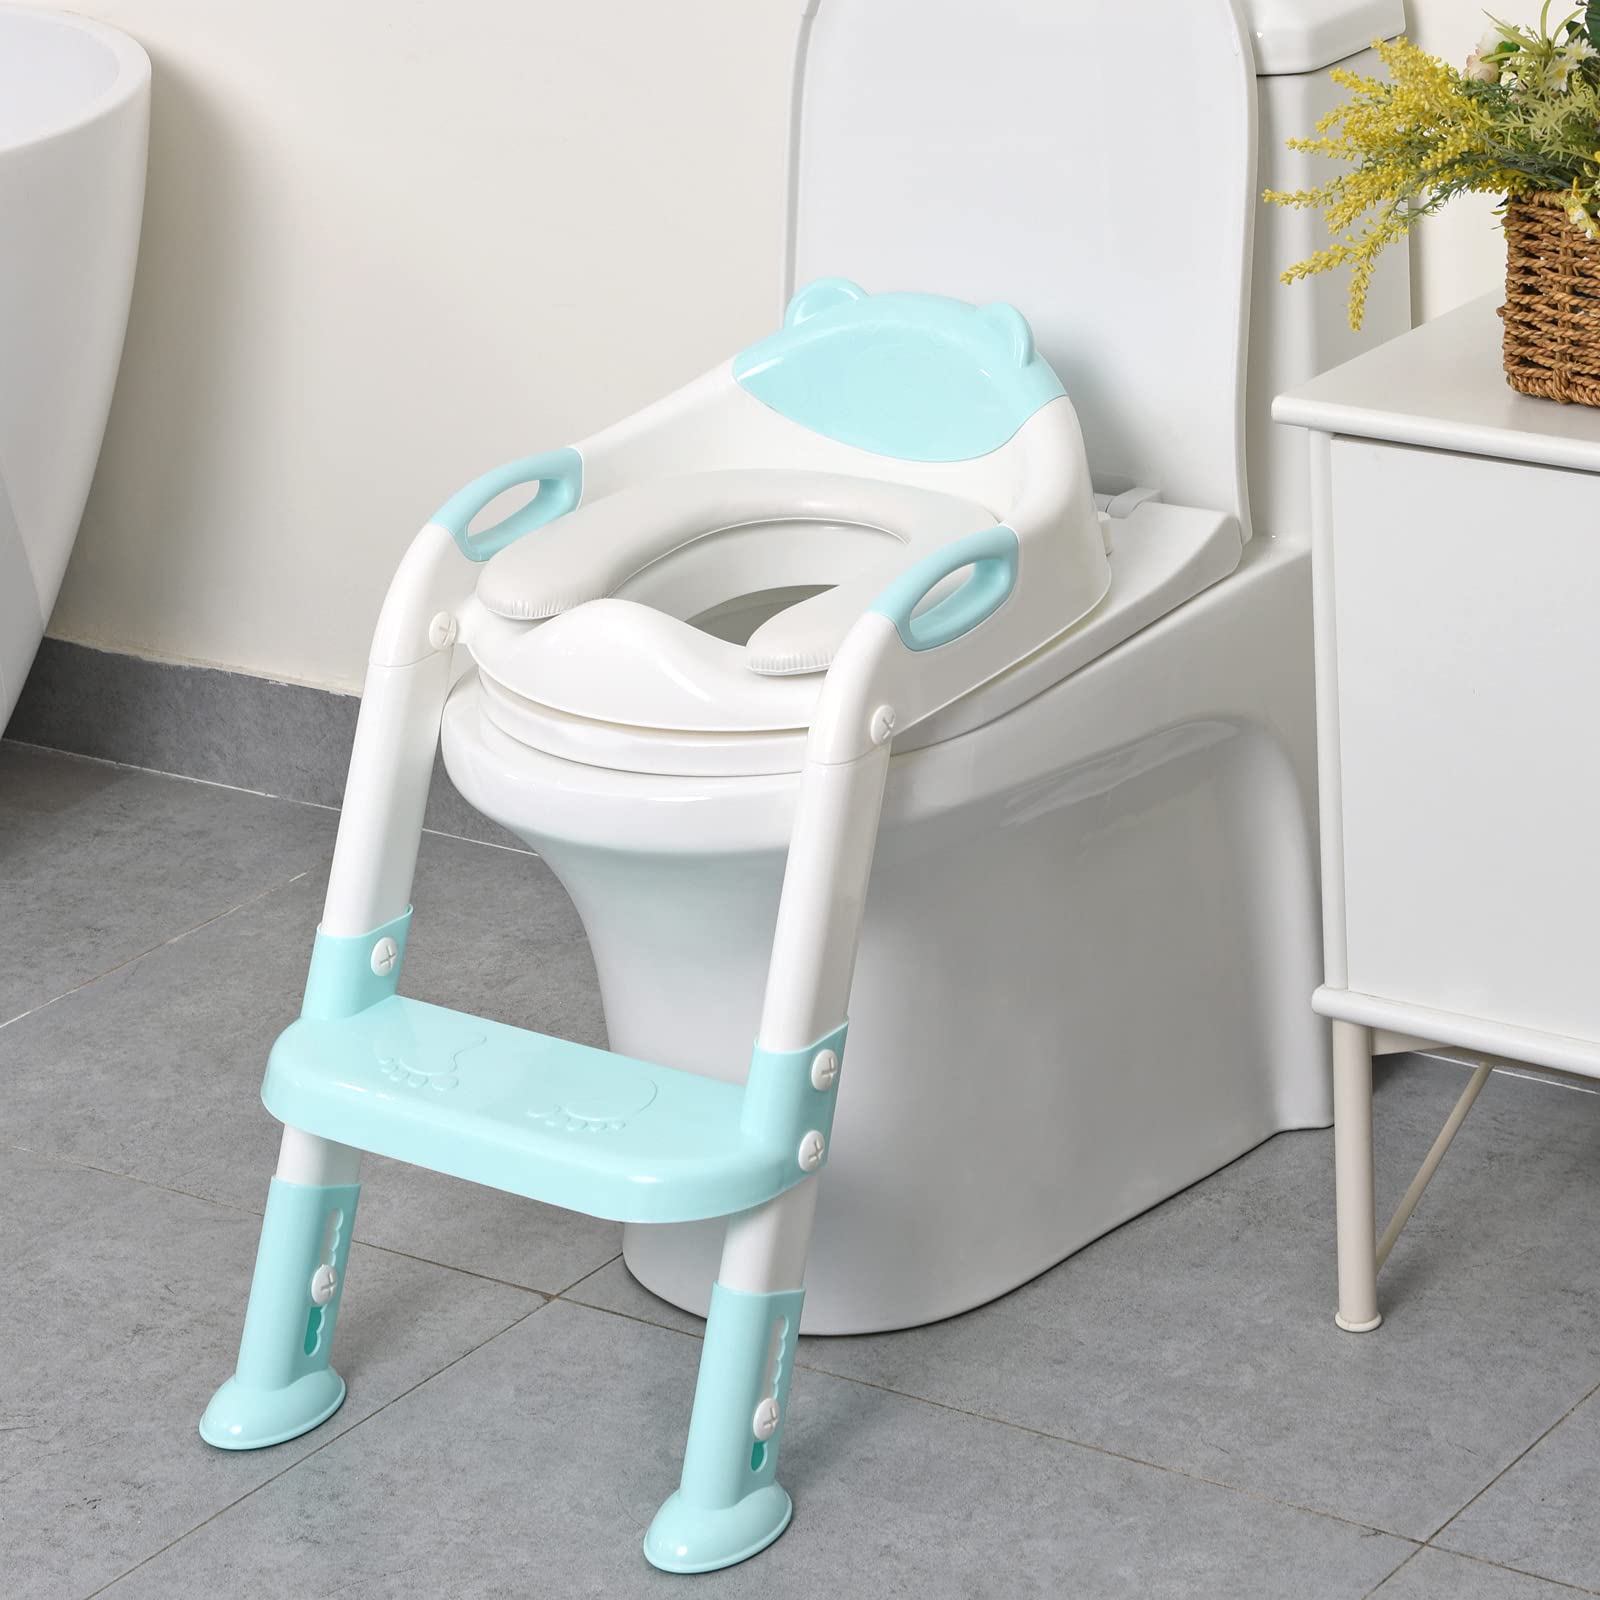 711TEK Potty Training Seat Toddler Toilet Seat with Step Stool